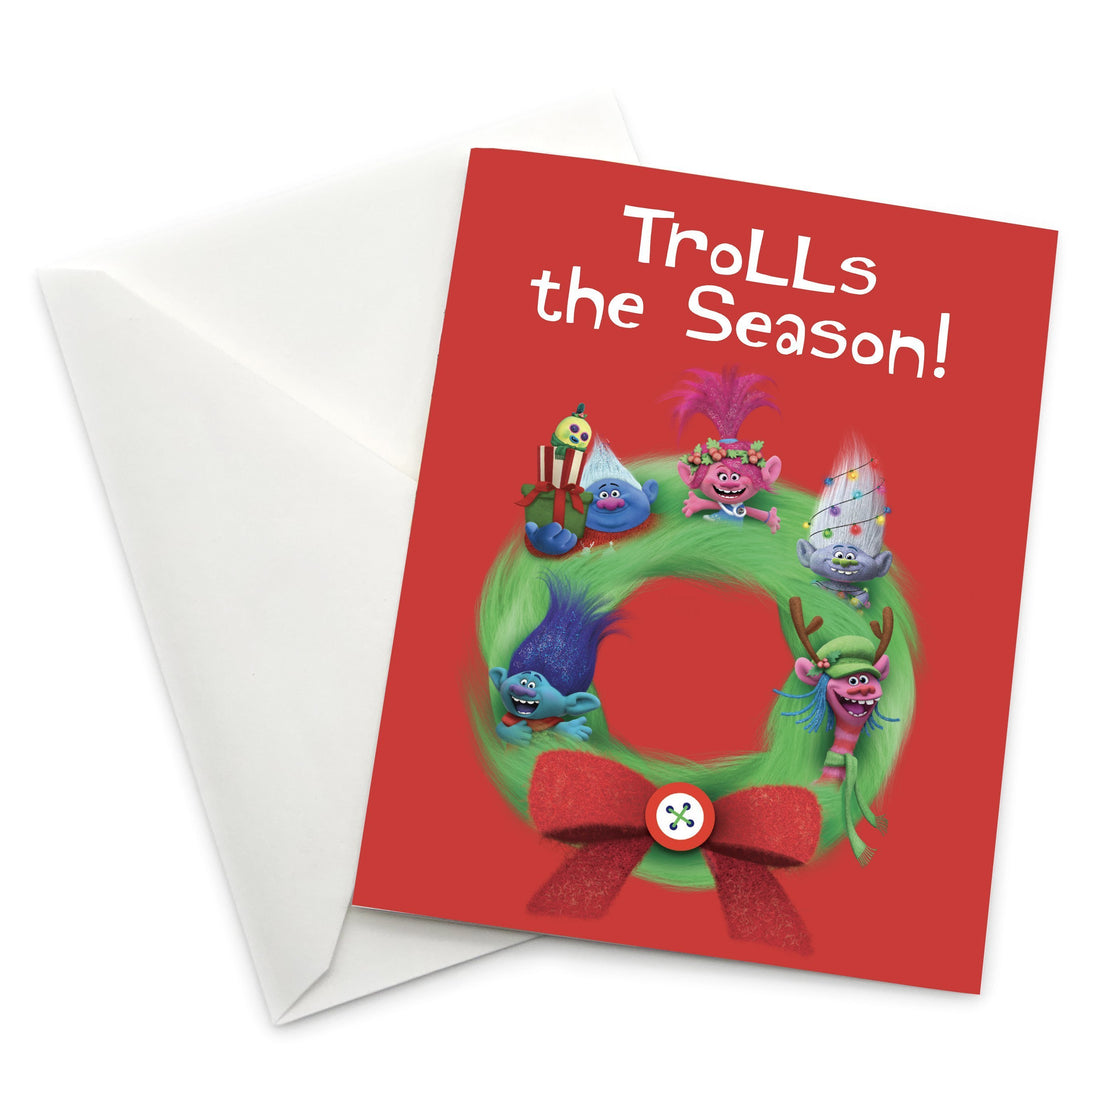 Trolls World Tour "Trolls the Season!" Holiday Card